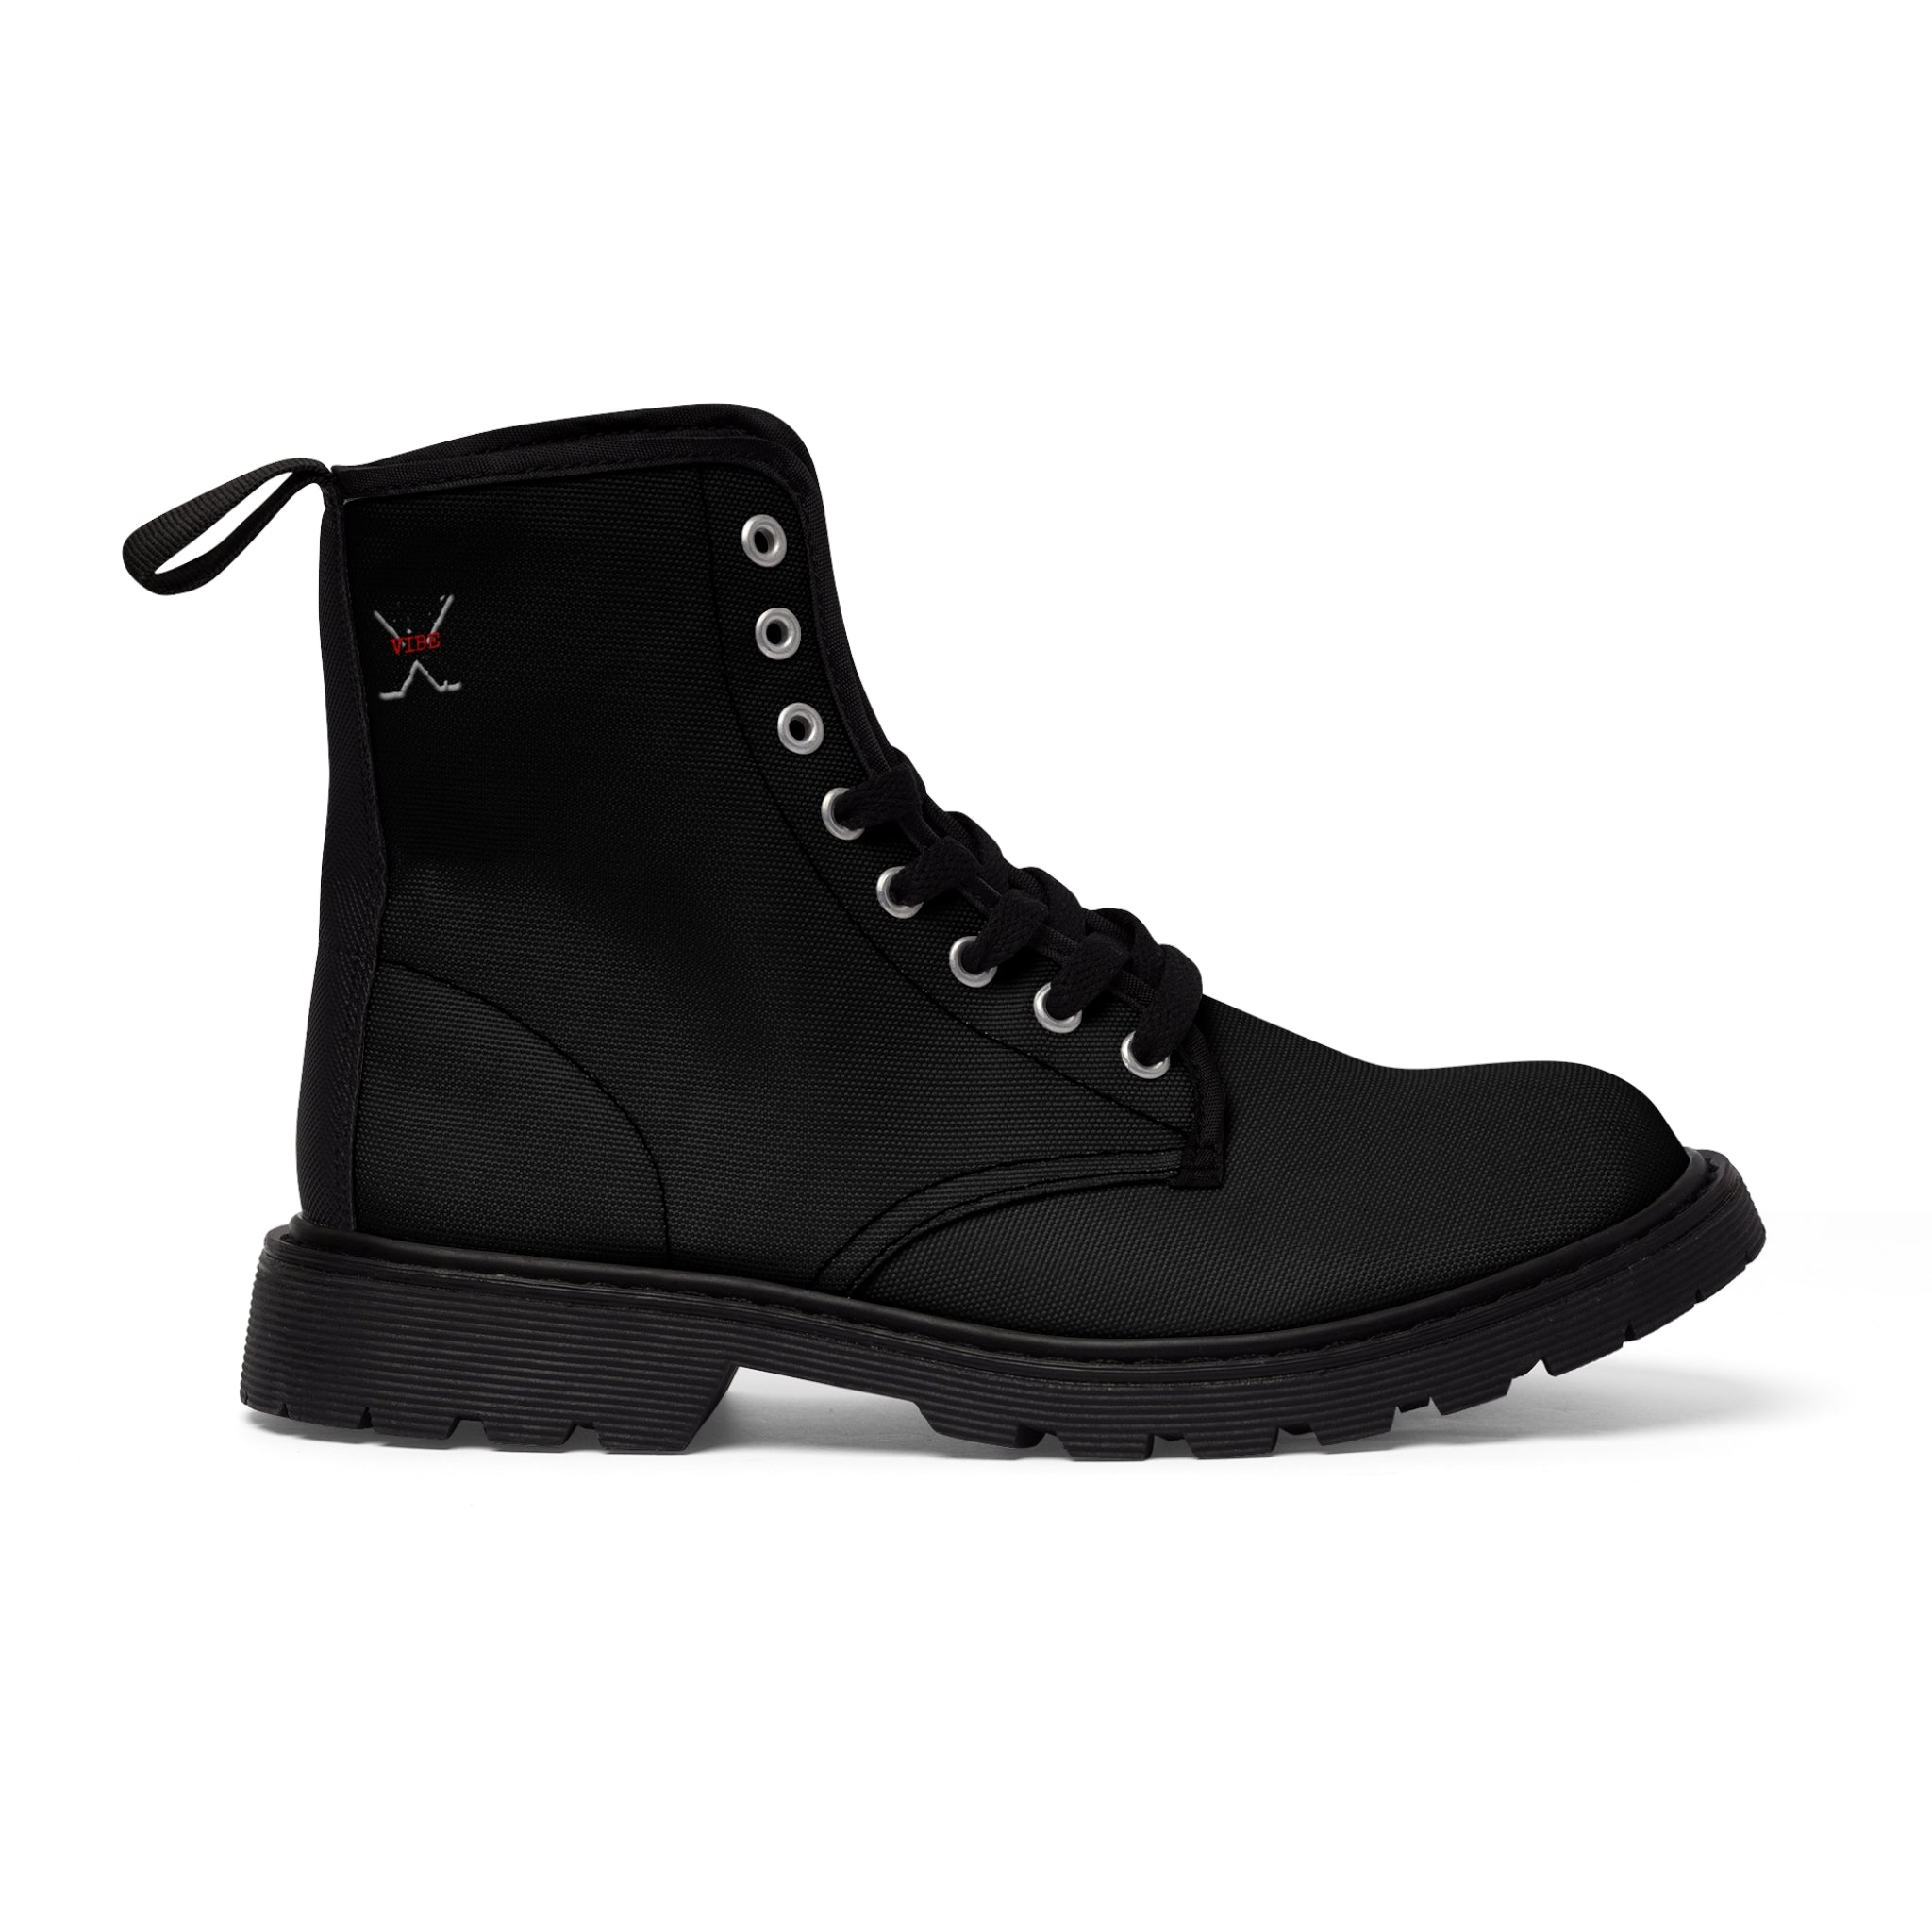 X-Vibe Men's Canvas Boots (Black/B)